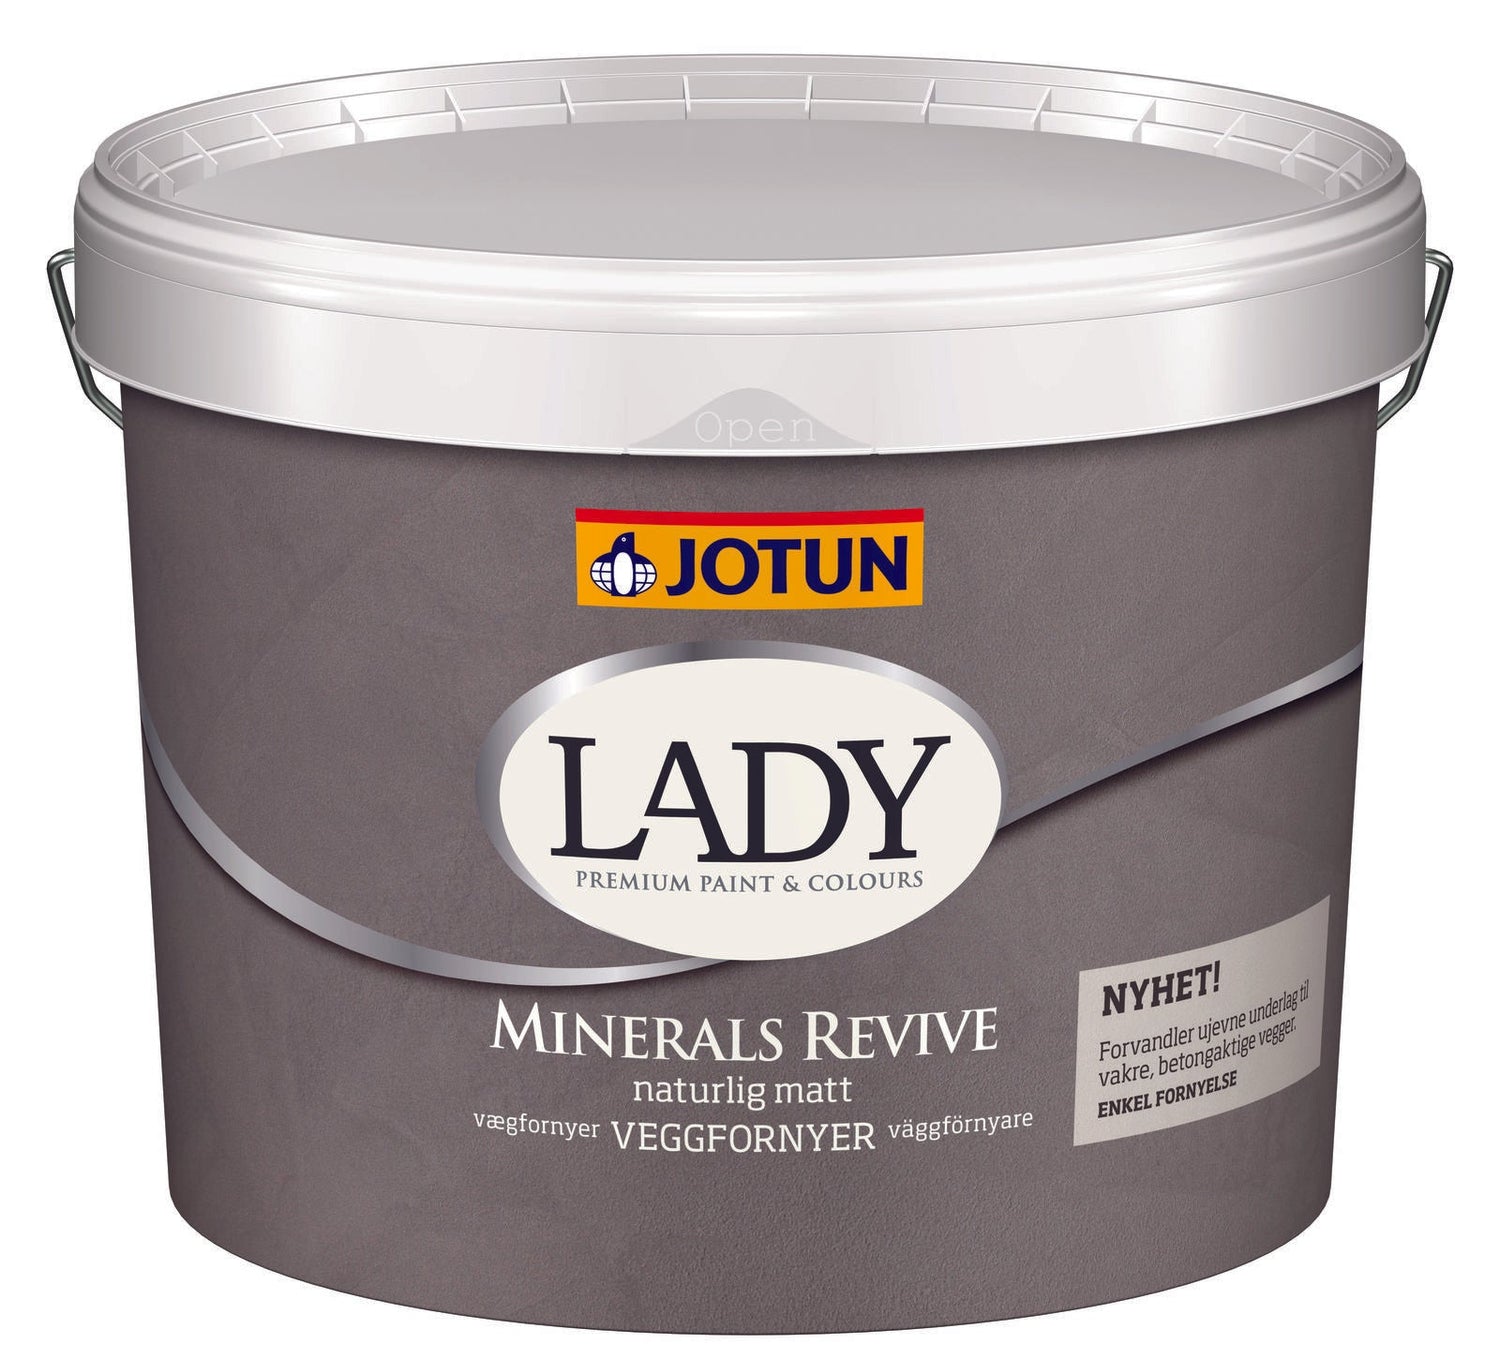 5489 FREE SPIRIT - Jotun Lady Minerals Revive - Malprivat.dk